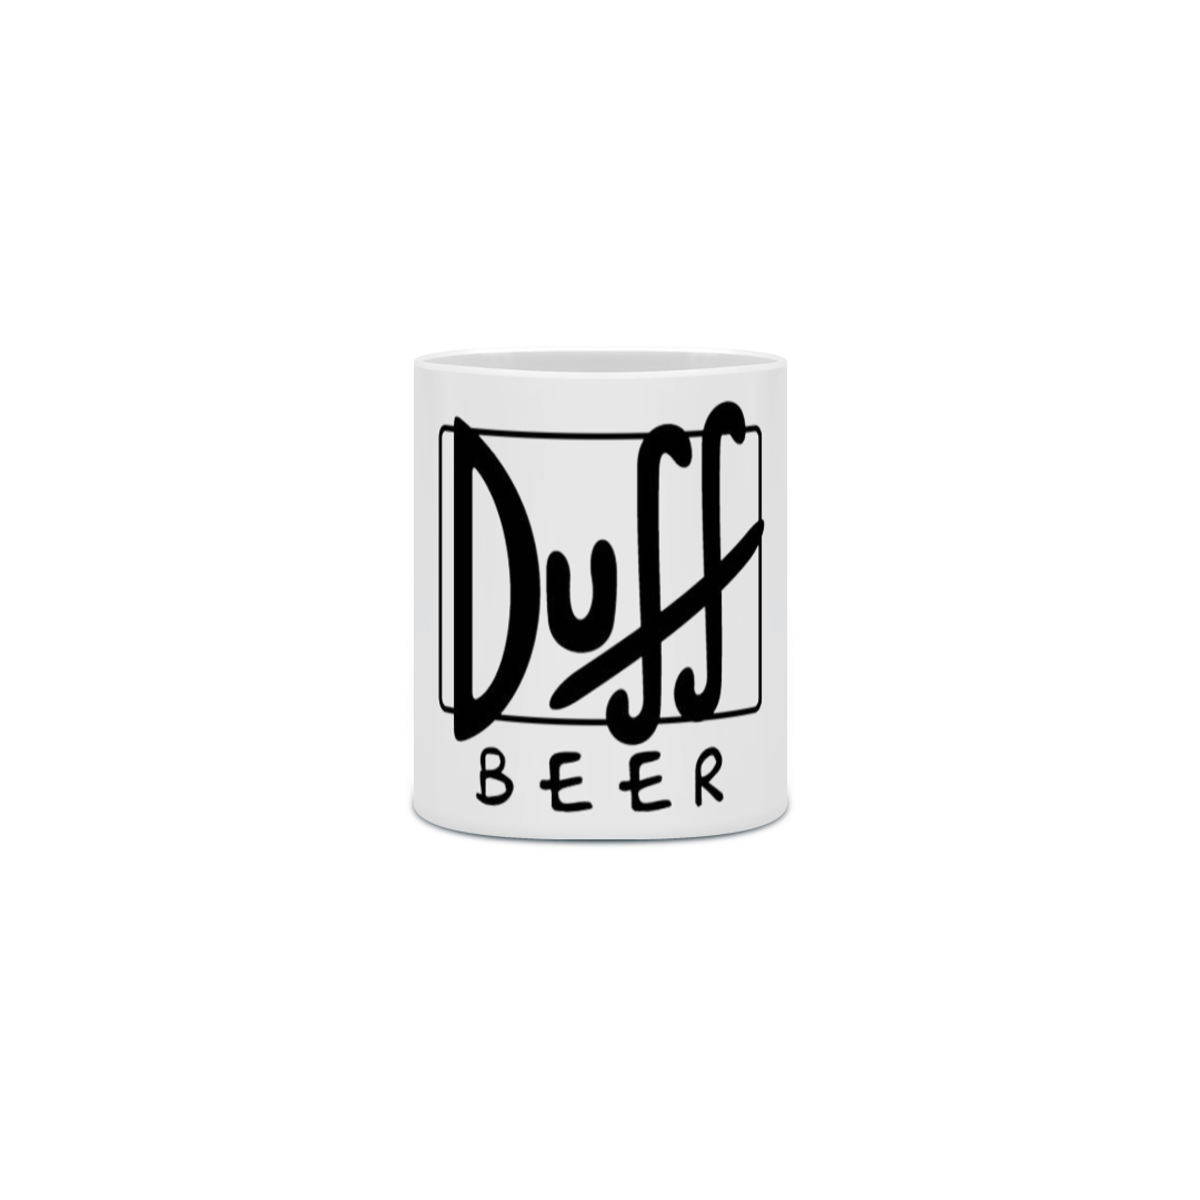 Nome do produto: Duff Beer